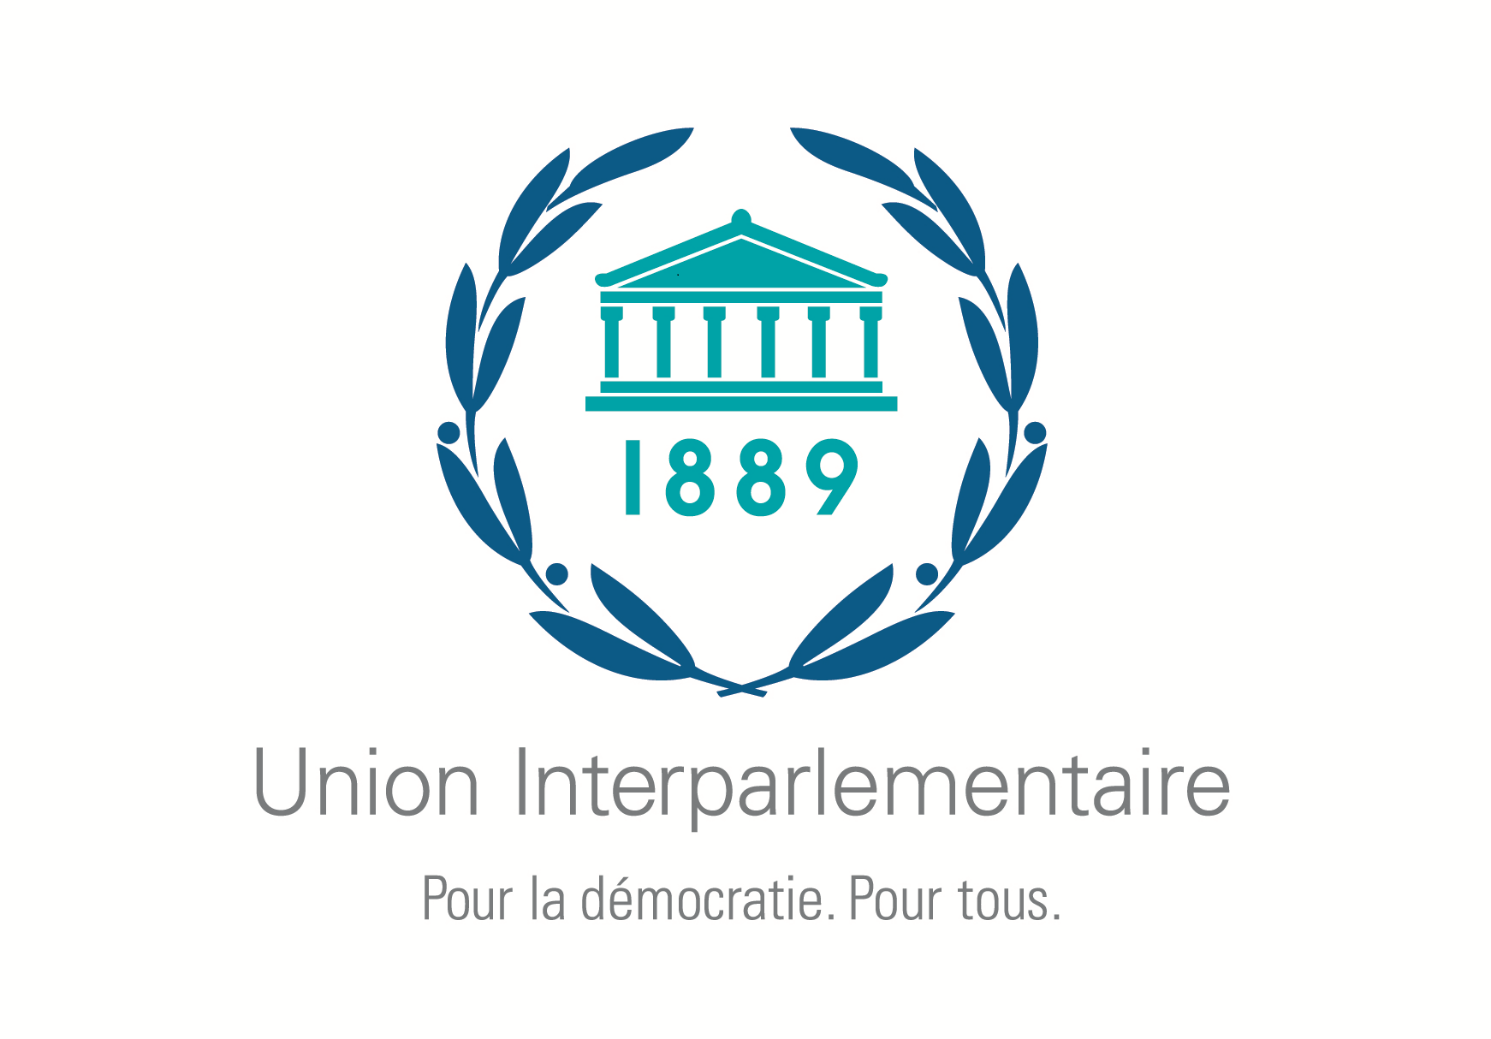 Union Interparlementaire